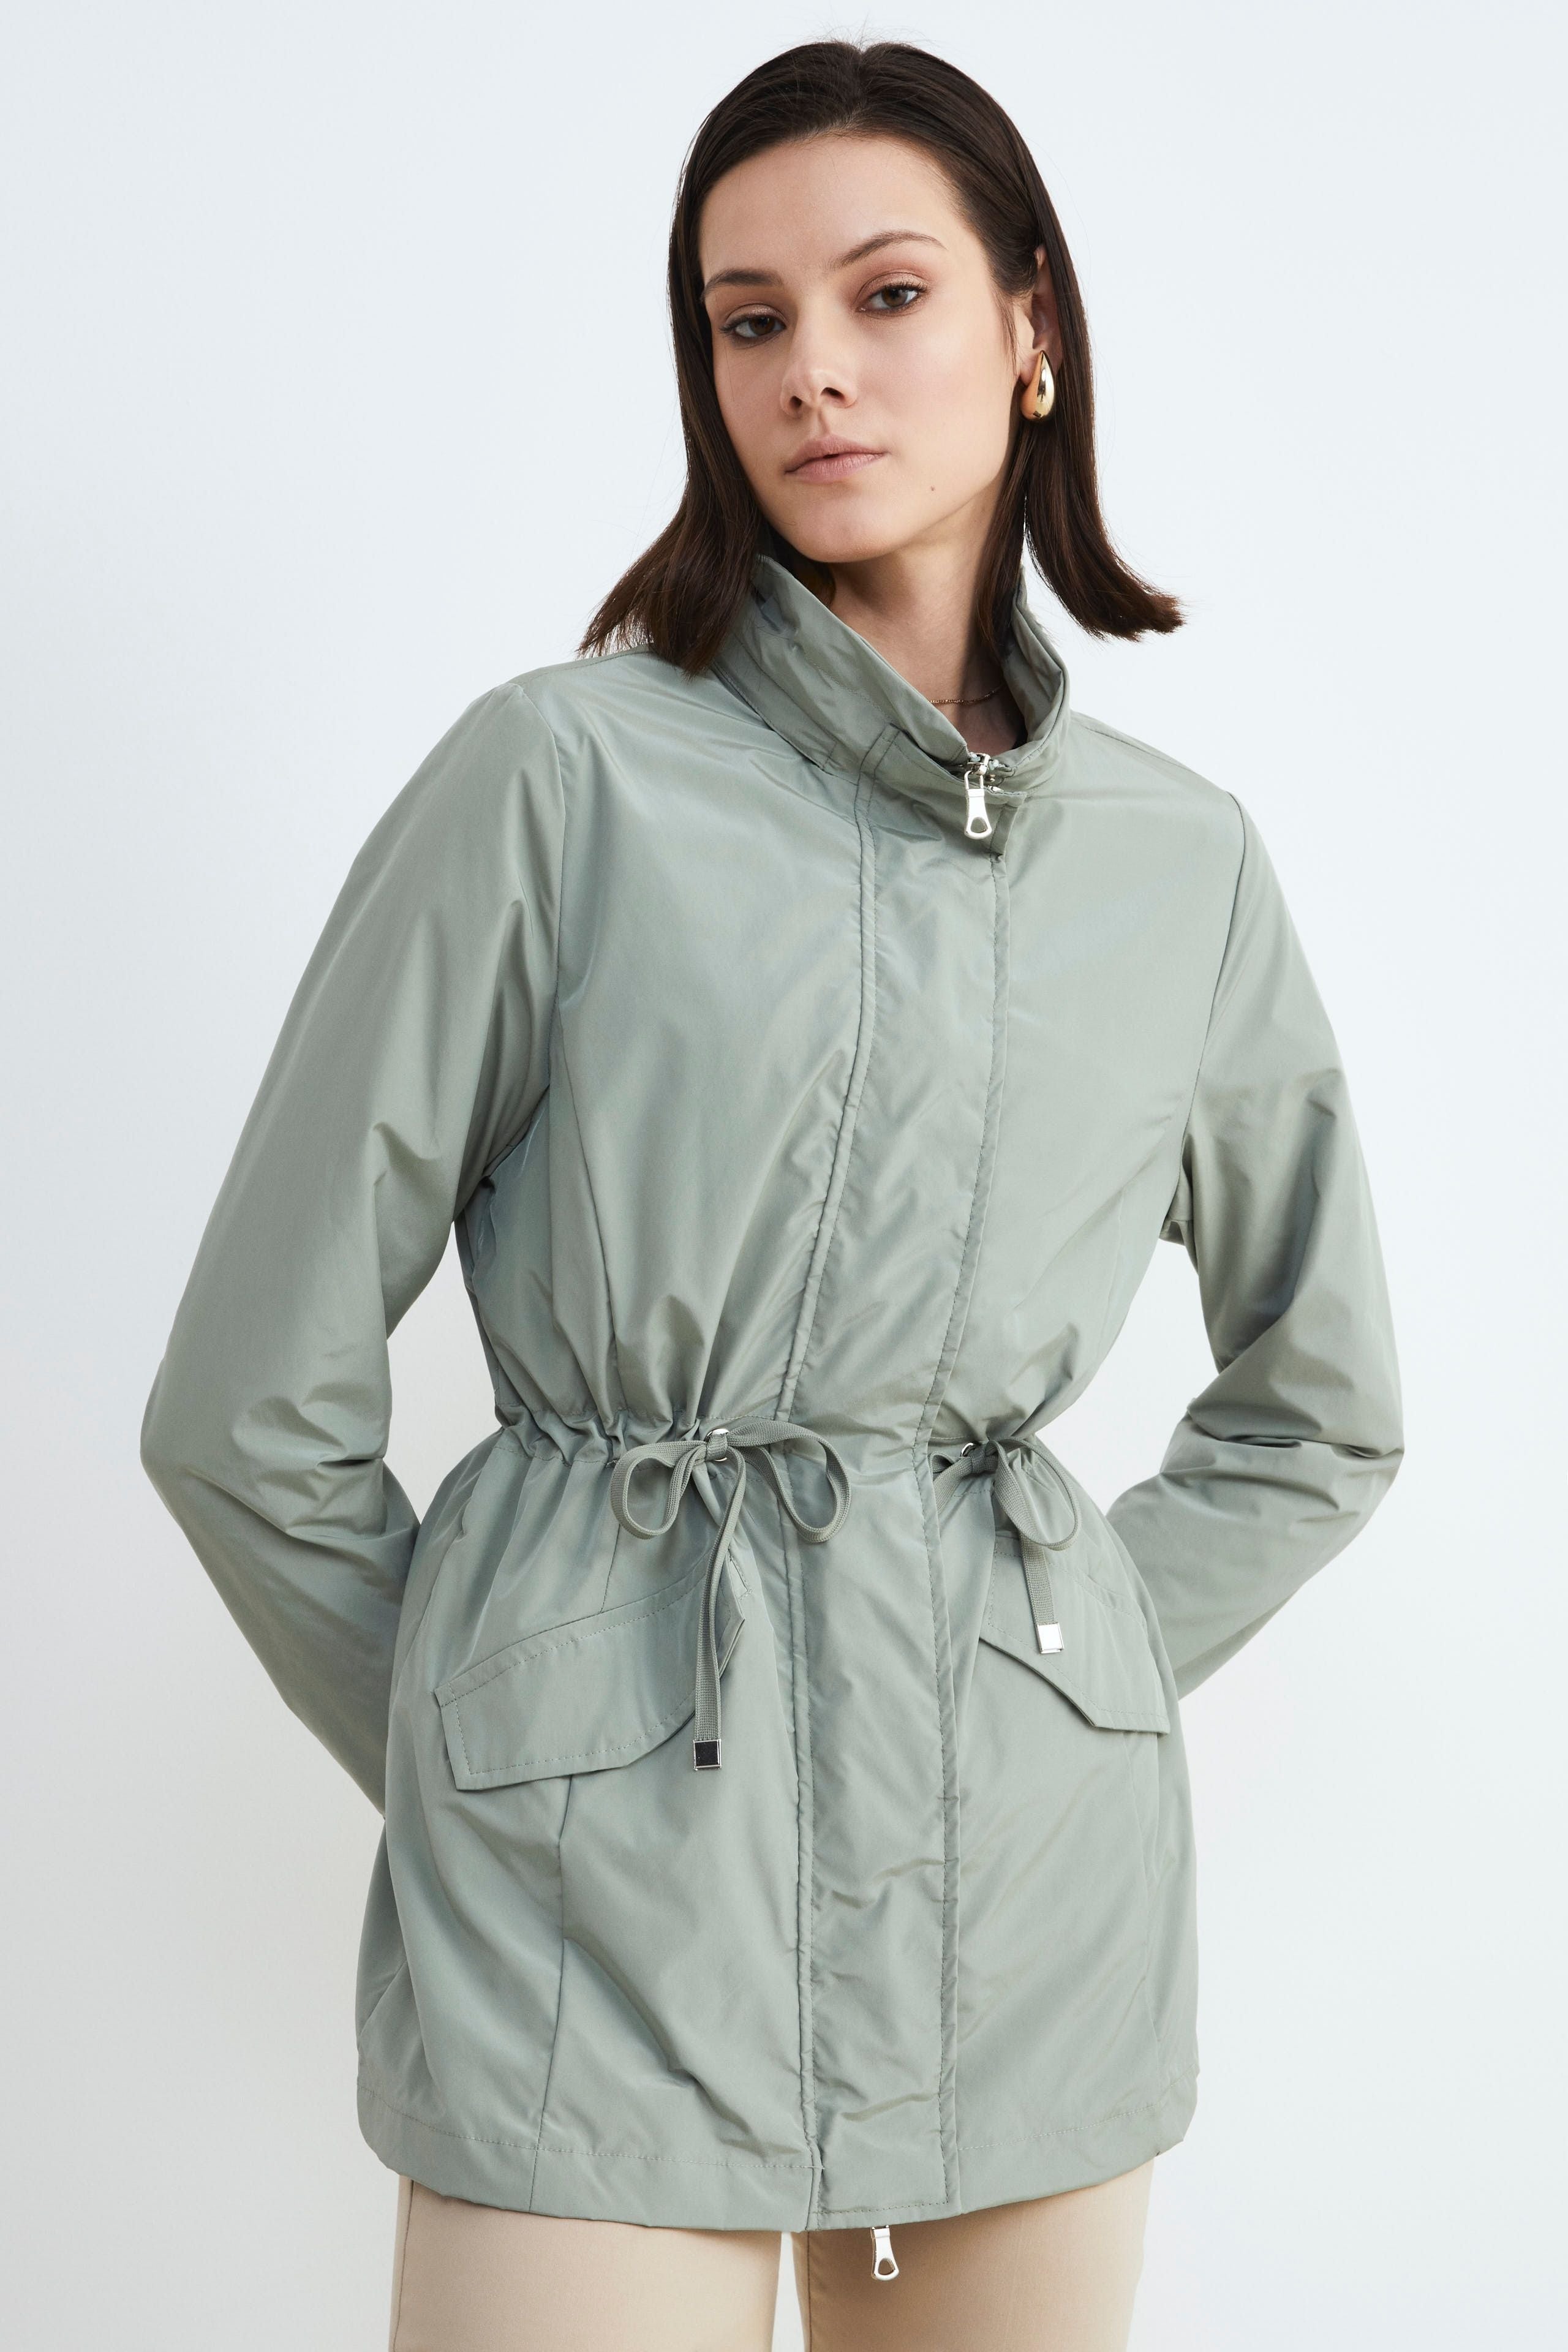 Women’s short trench coat - Sage green